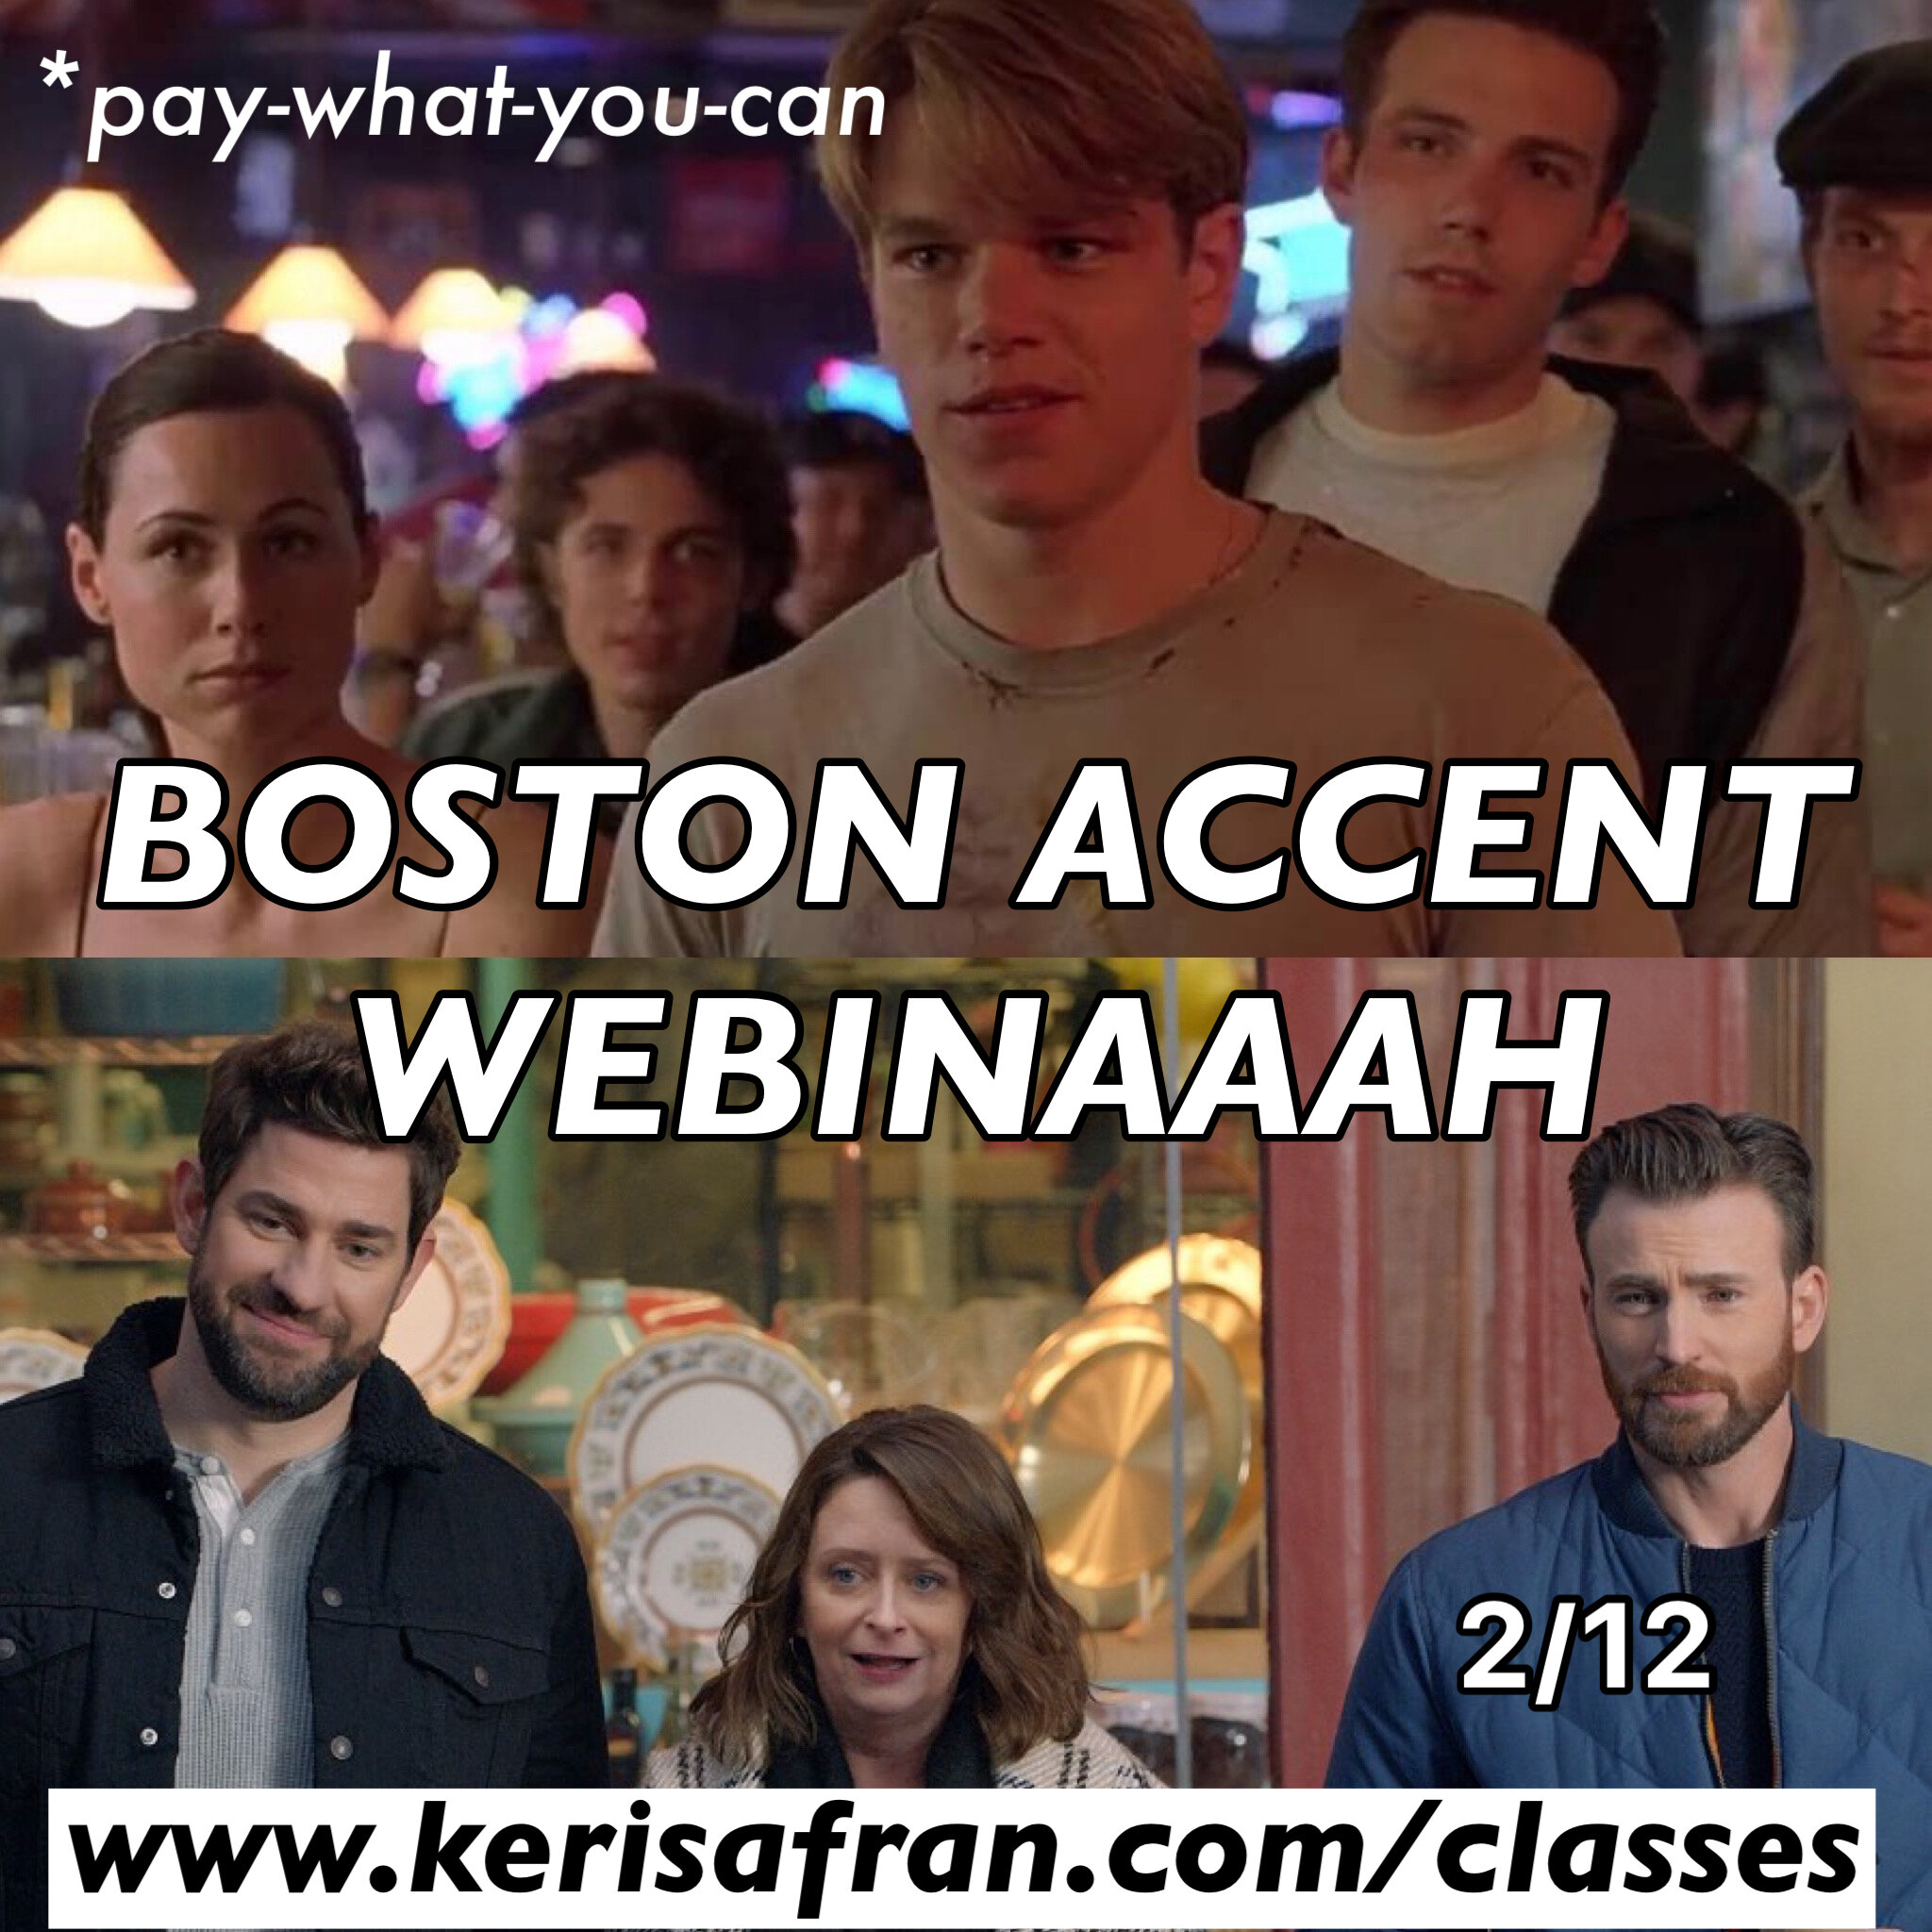 Boston Accent Webinah pic.JPG